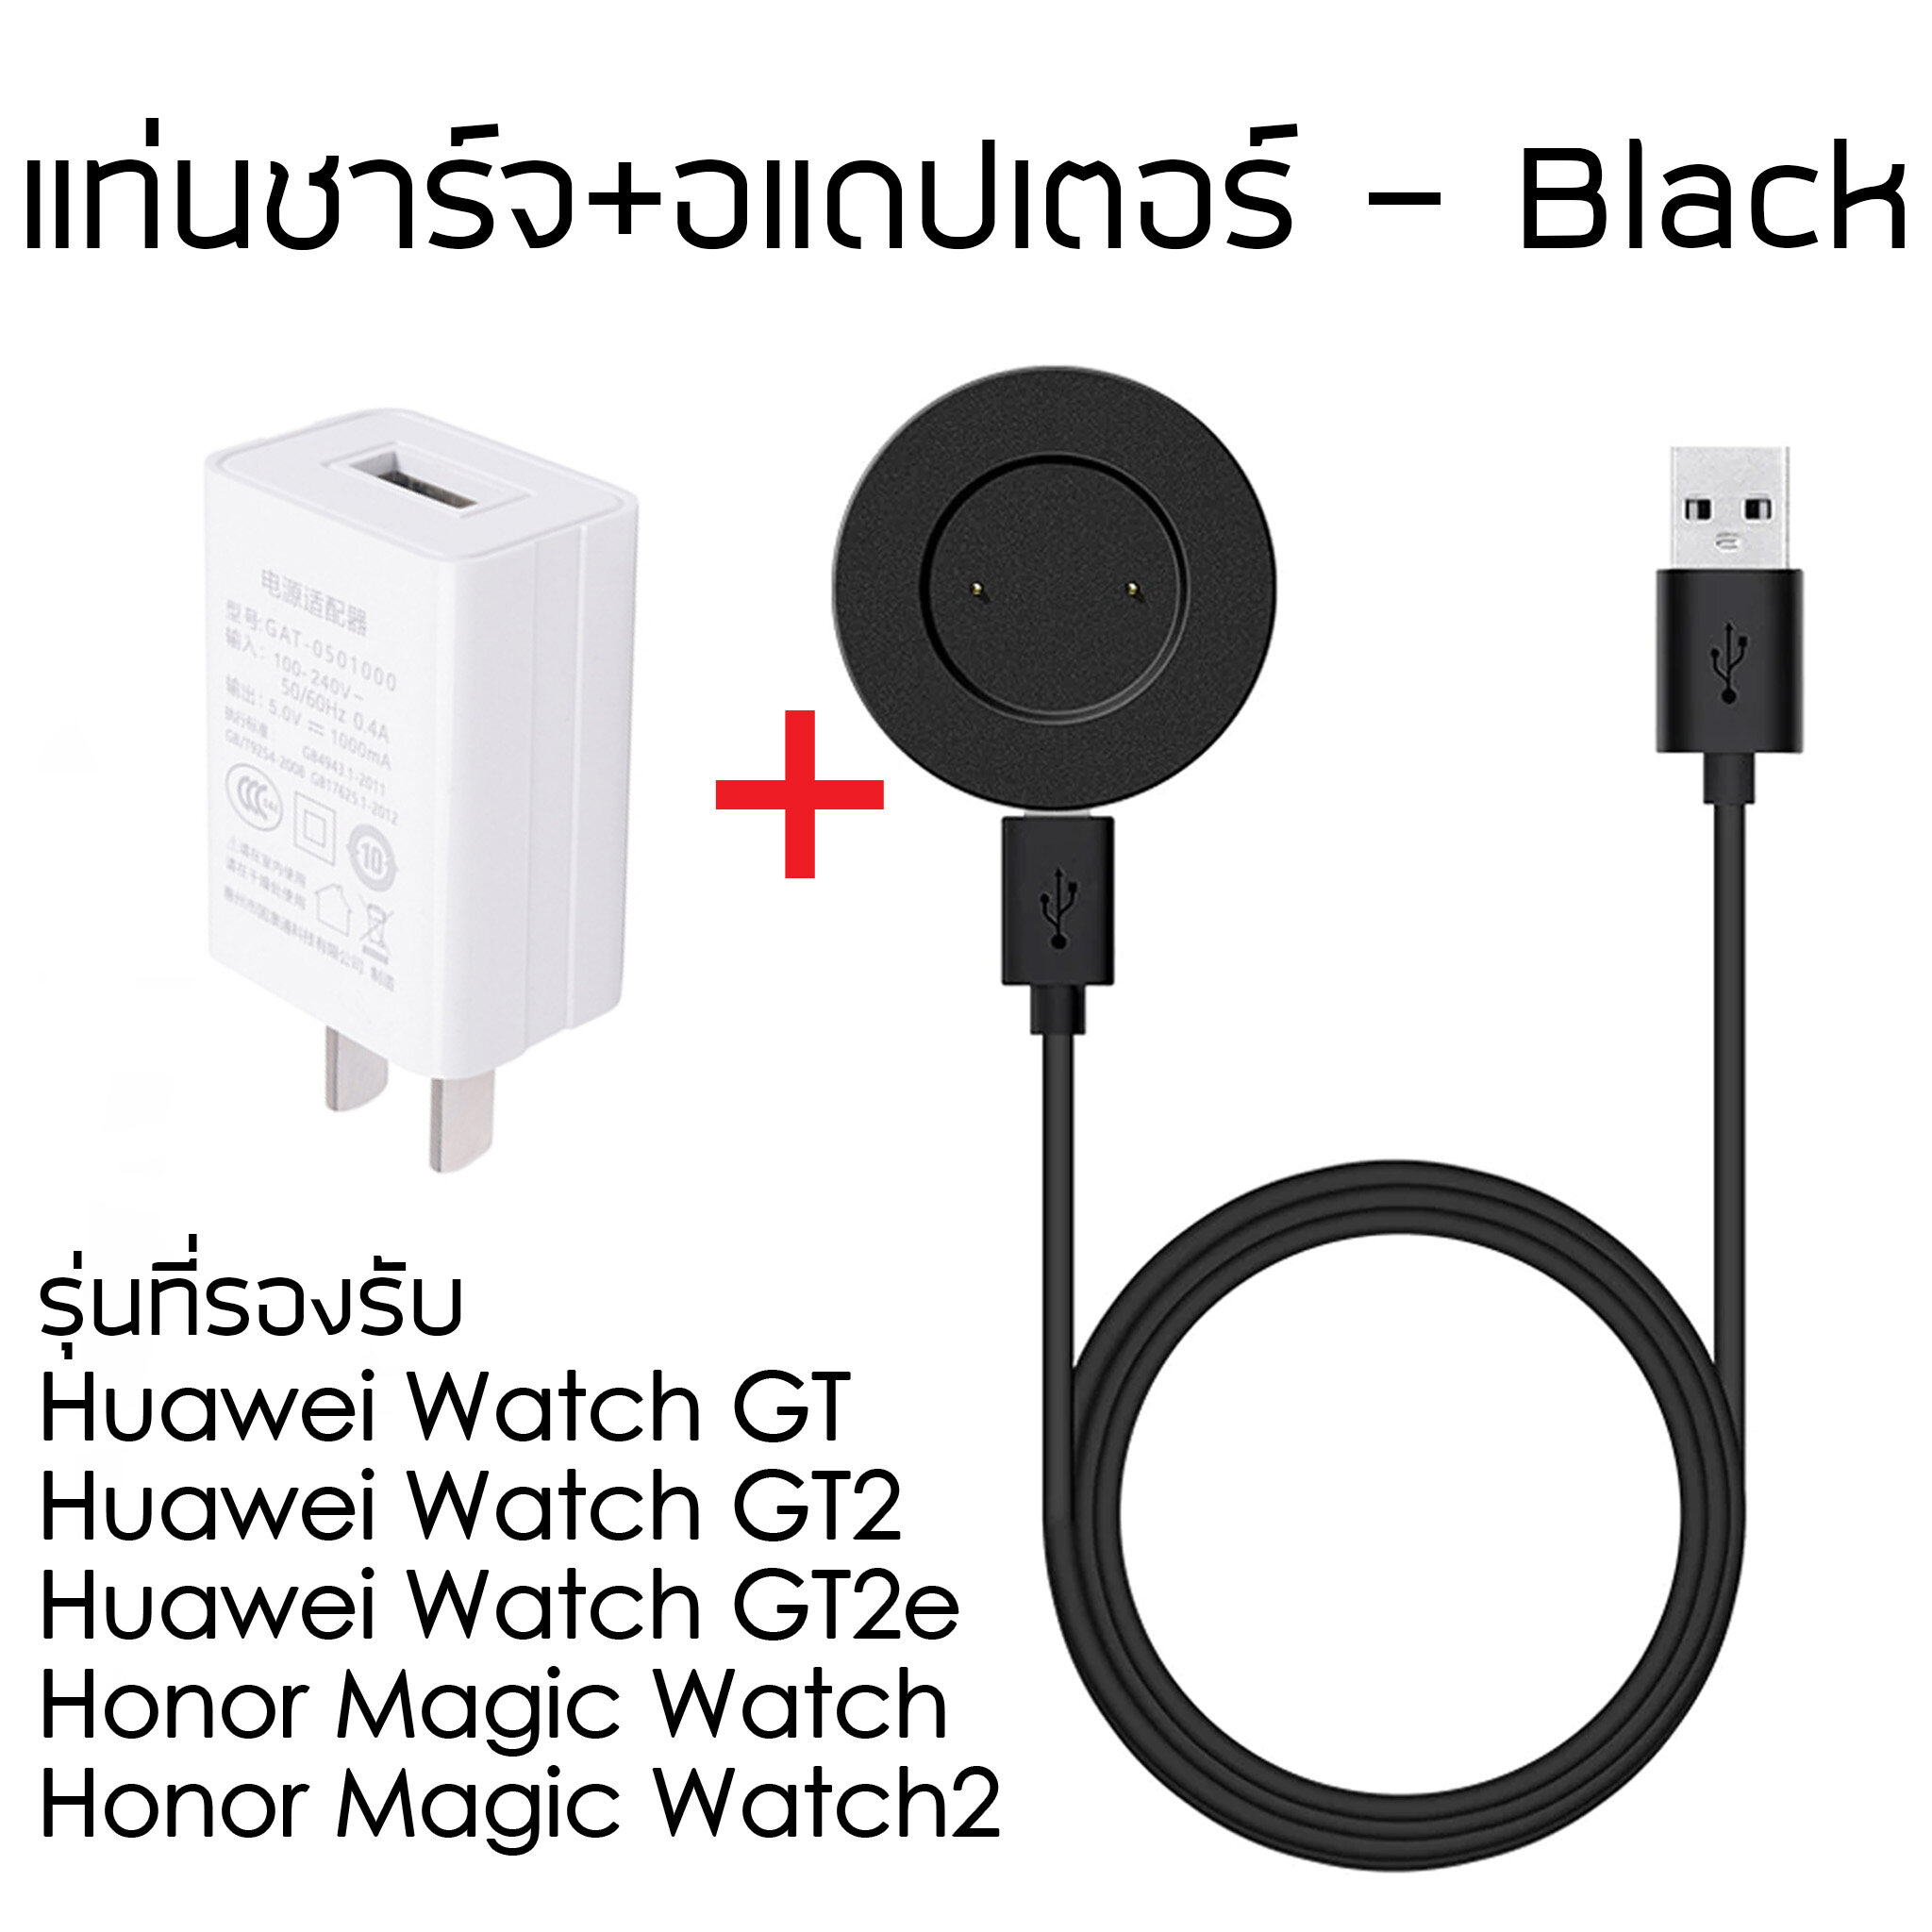 As แท่นชาร์จ For Huawei Watch GT2 Pro / Watch Fit / GT2 / GT / Magic Watch น้ำหนักเบา พกพาง่าย พร้อม Adapter และสาย USB